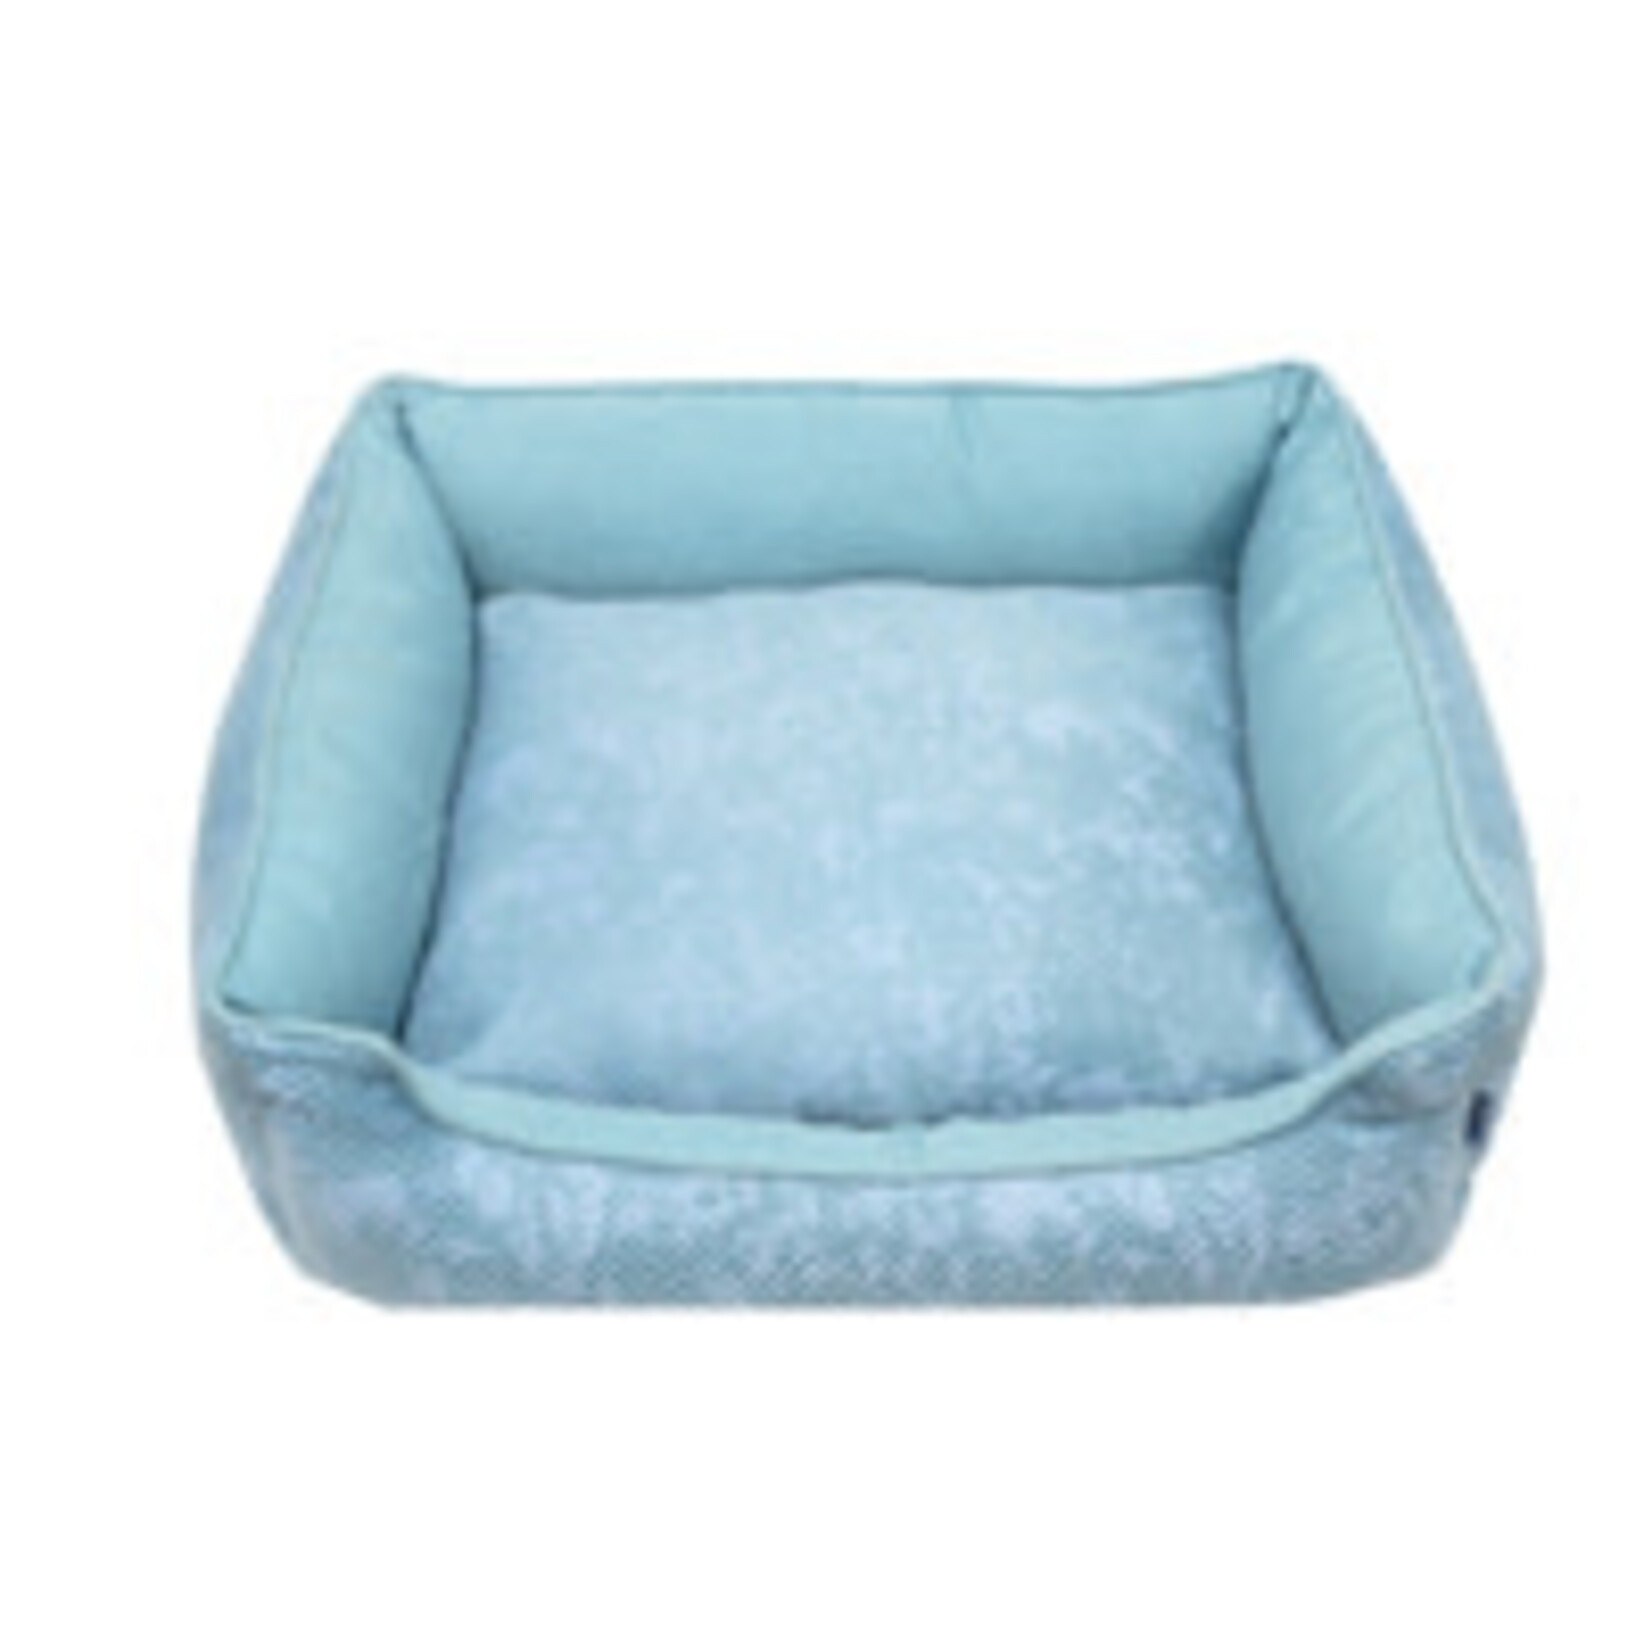 Resploot Toy Resploot Sofa Bed - Rectangular - Lagoon Blue - 60 x 50 x 21 cm (24 x 20 x 8 in)